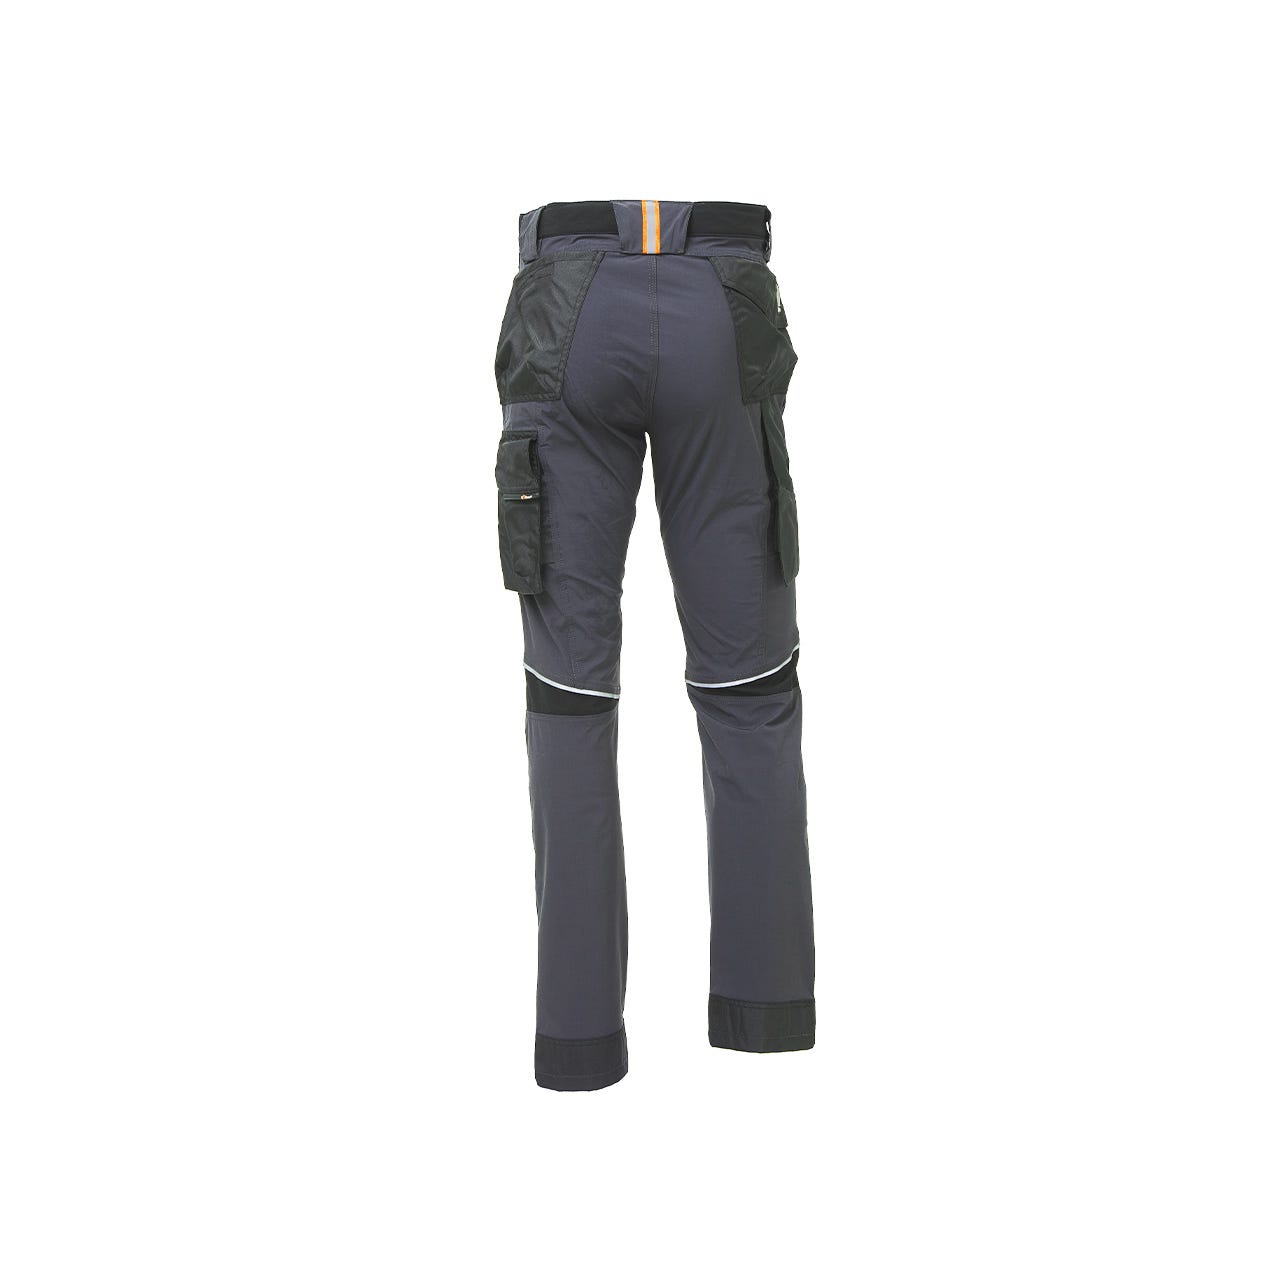 U-Power - Pantalon de travail Slim gris WORLD - Gris - M 4